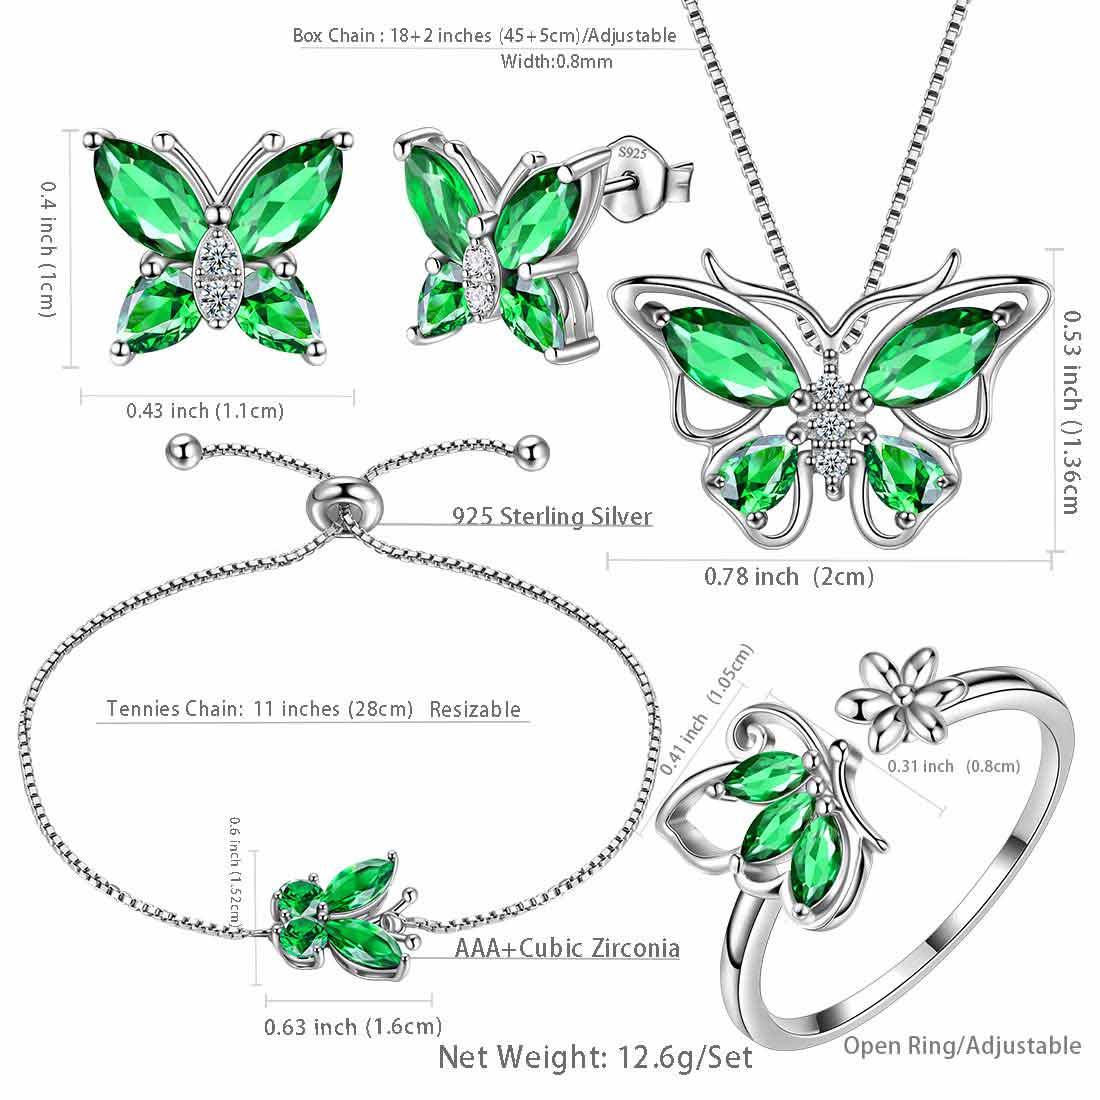 Butterfly Birthstone May Emerald Jewelry Set 5PCS - Jewelry Set - Aurora Tears